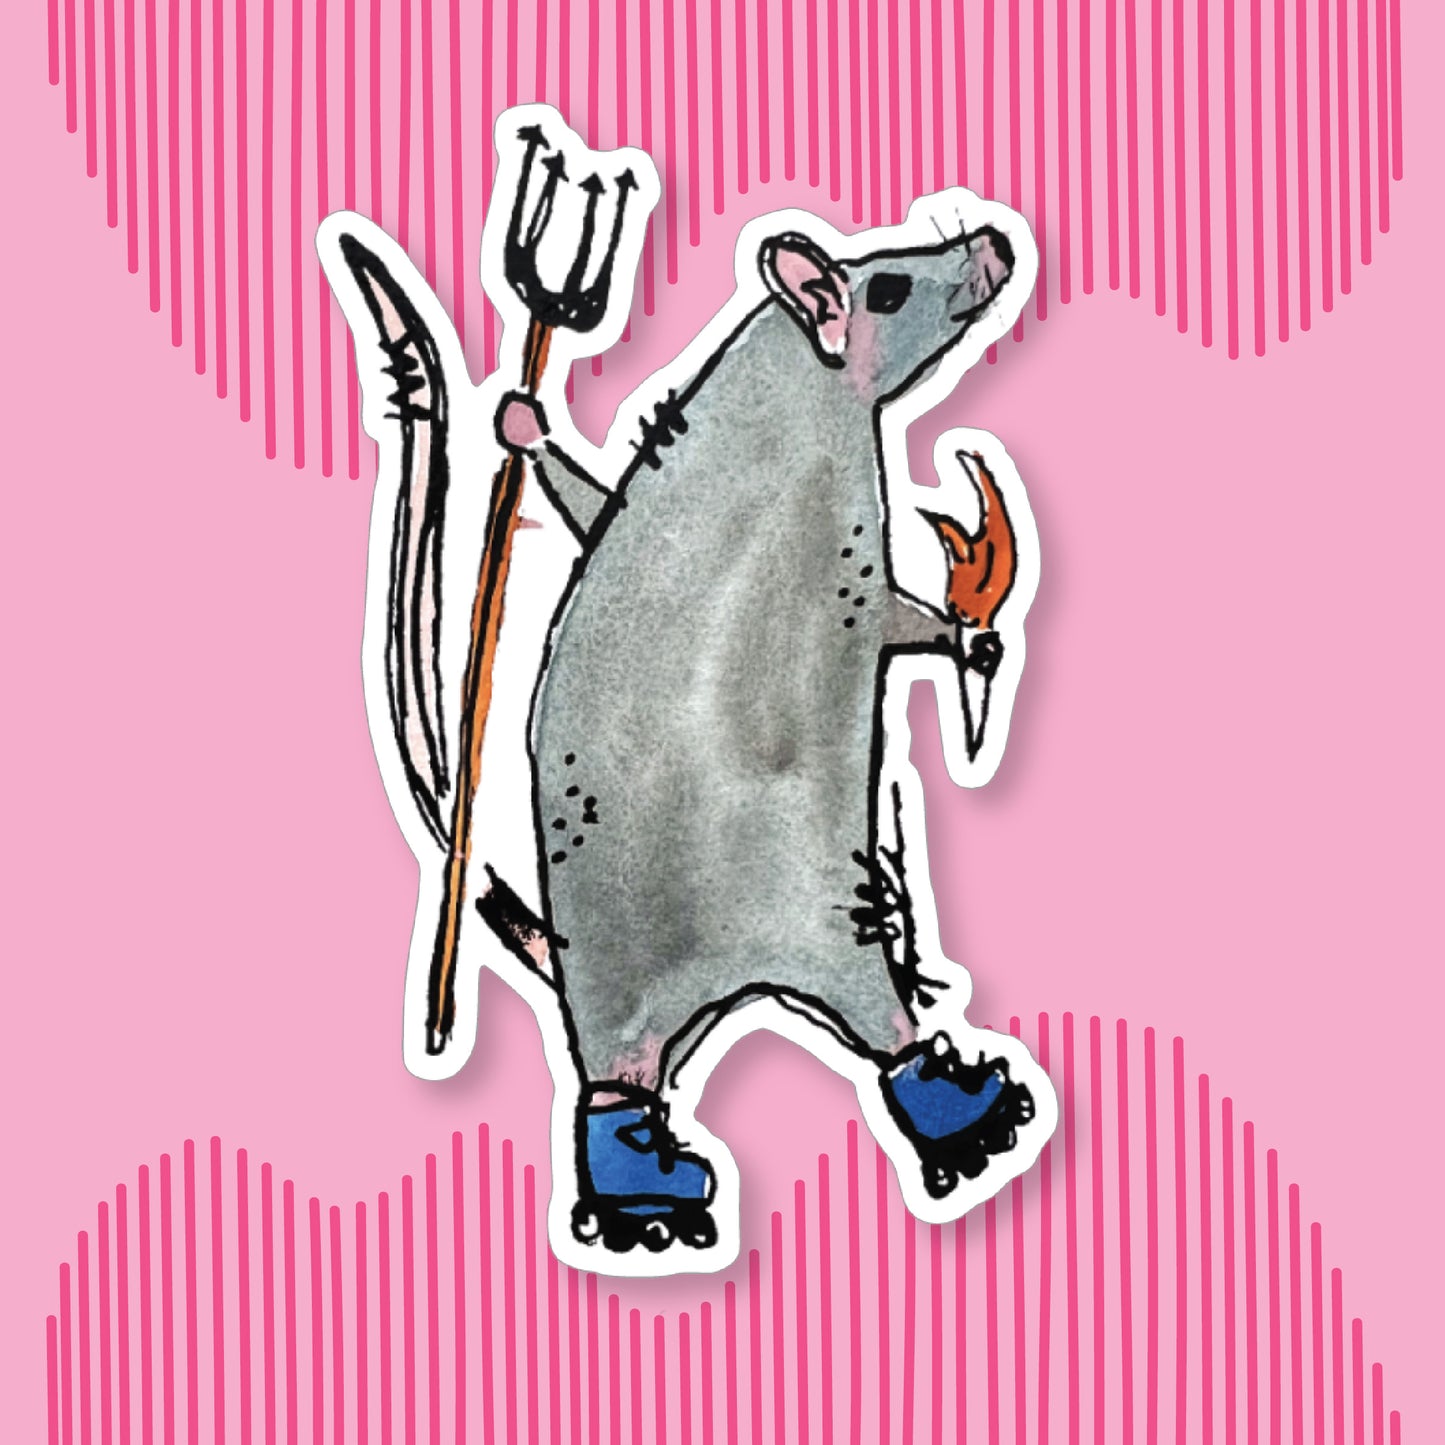 "Skating Rat with a Pitchfork" Sticker